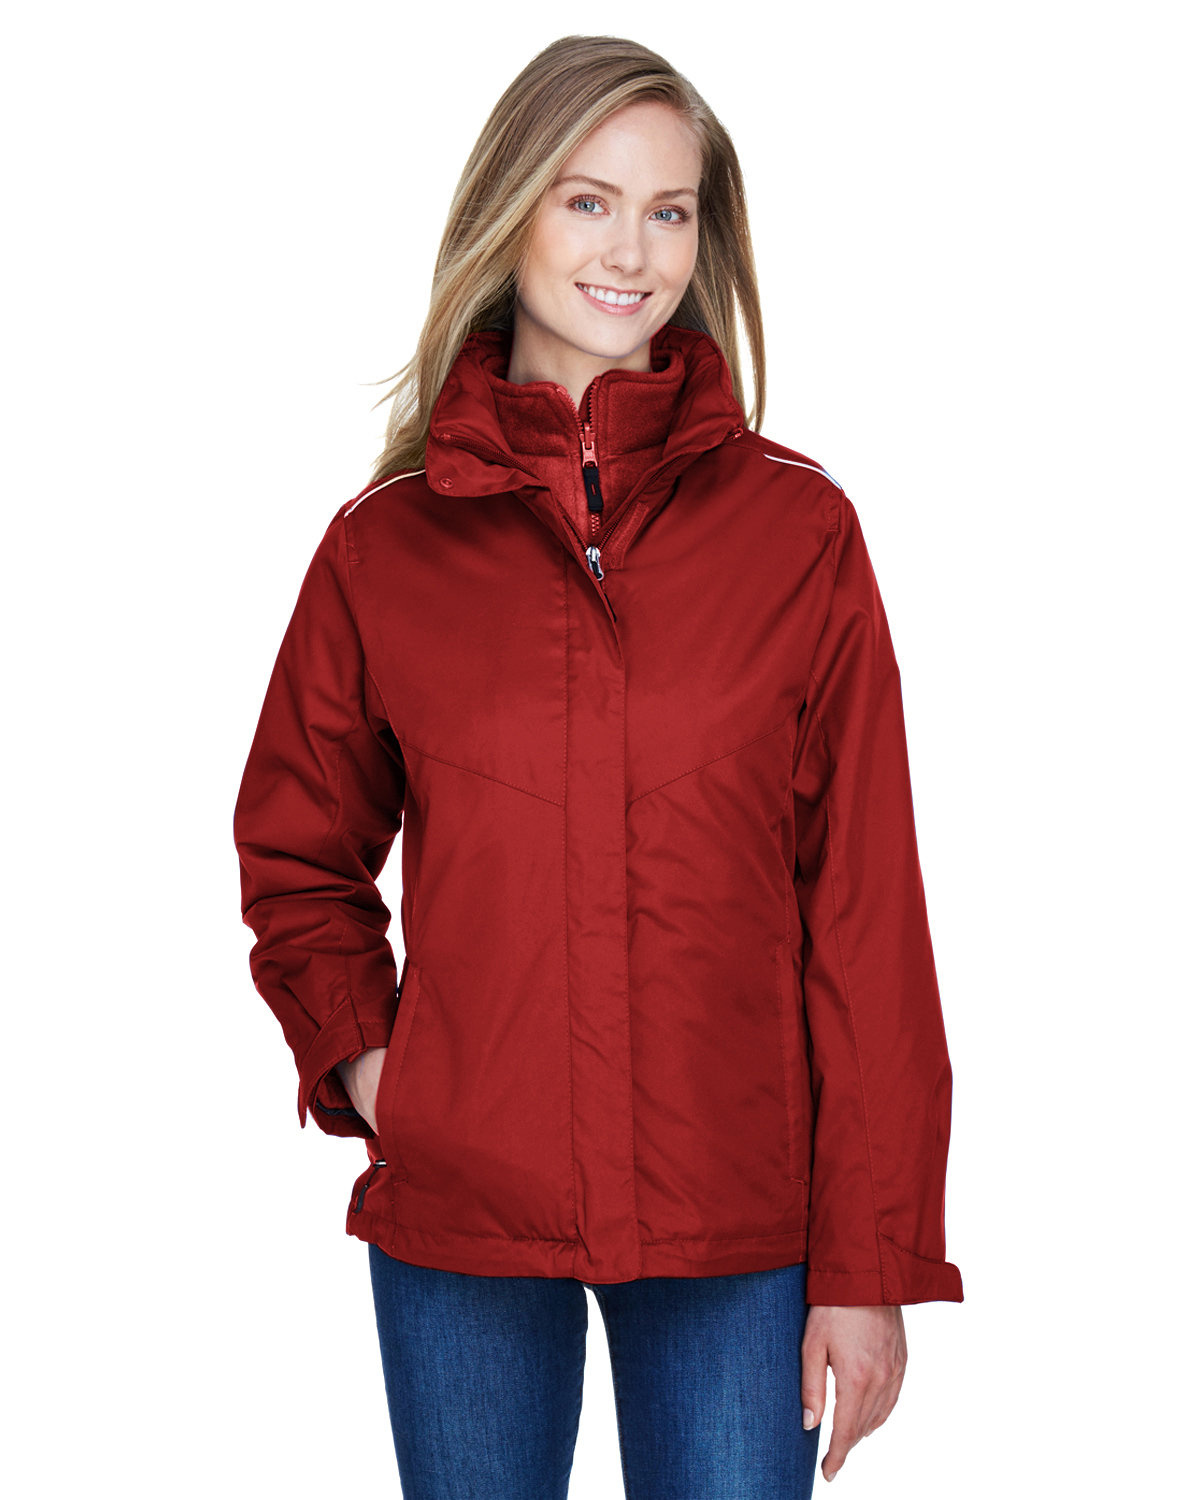 Core 365 Ladies' Region 3-in-1 Jacket with Fleece Liner CLASSIC RED 